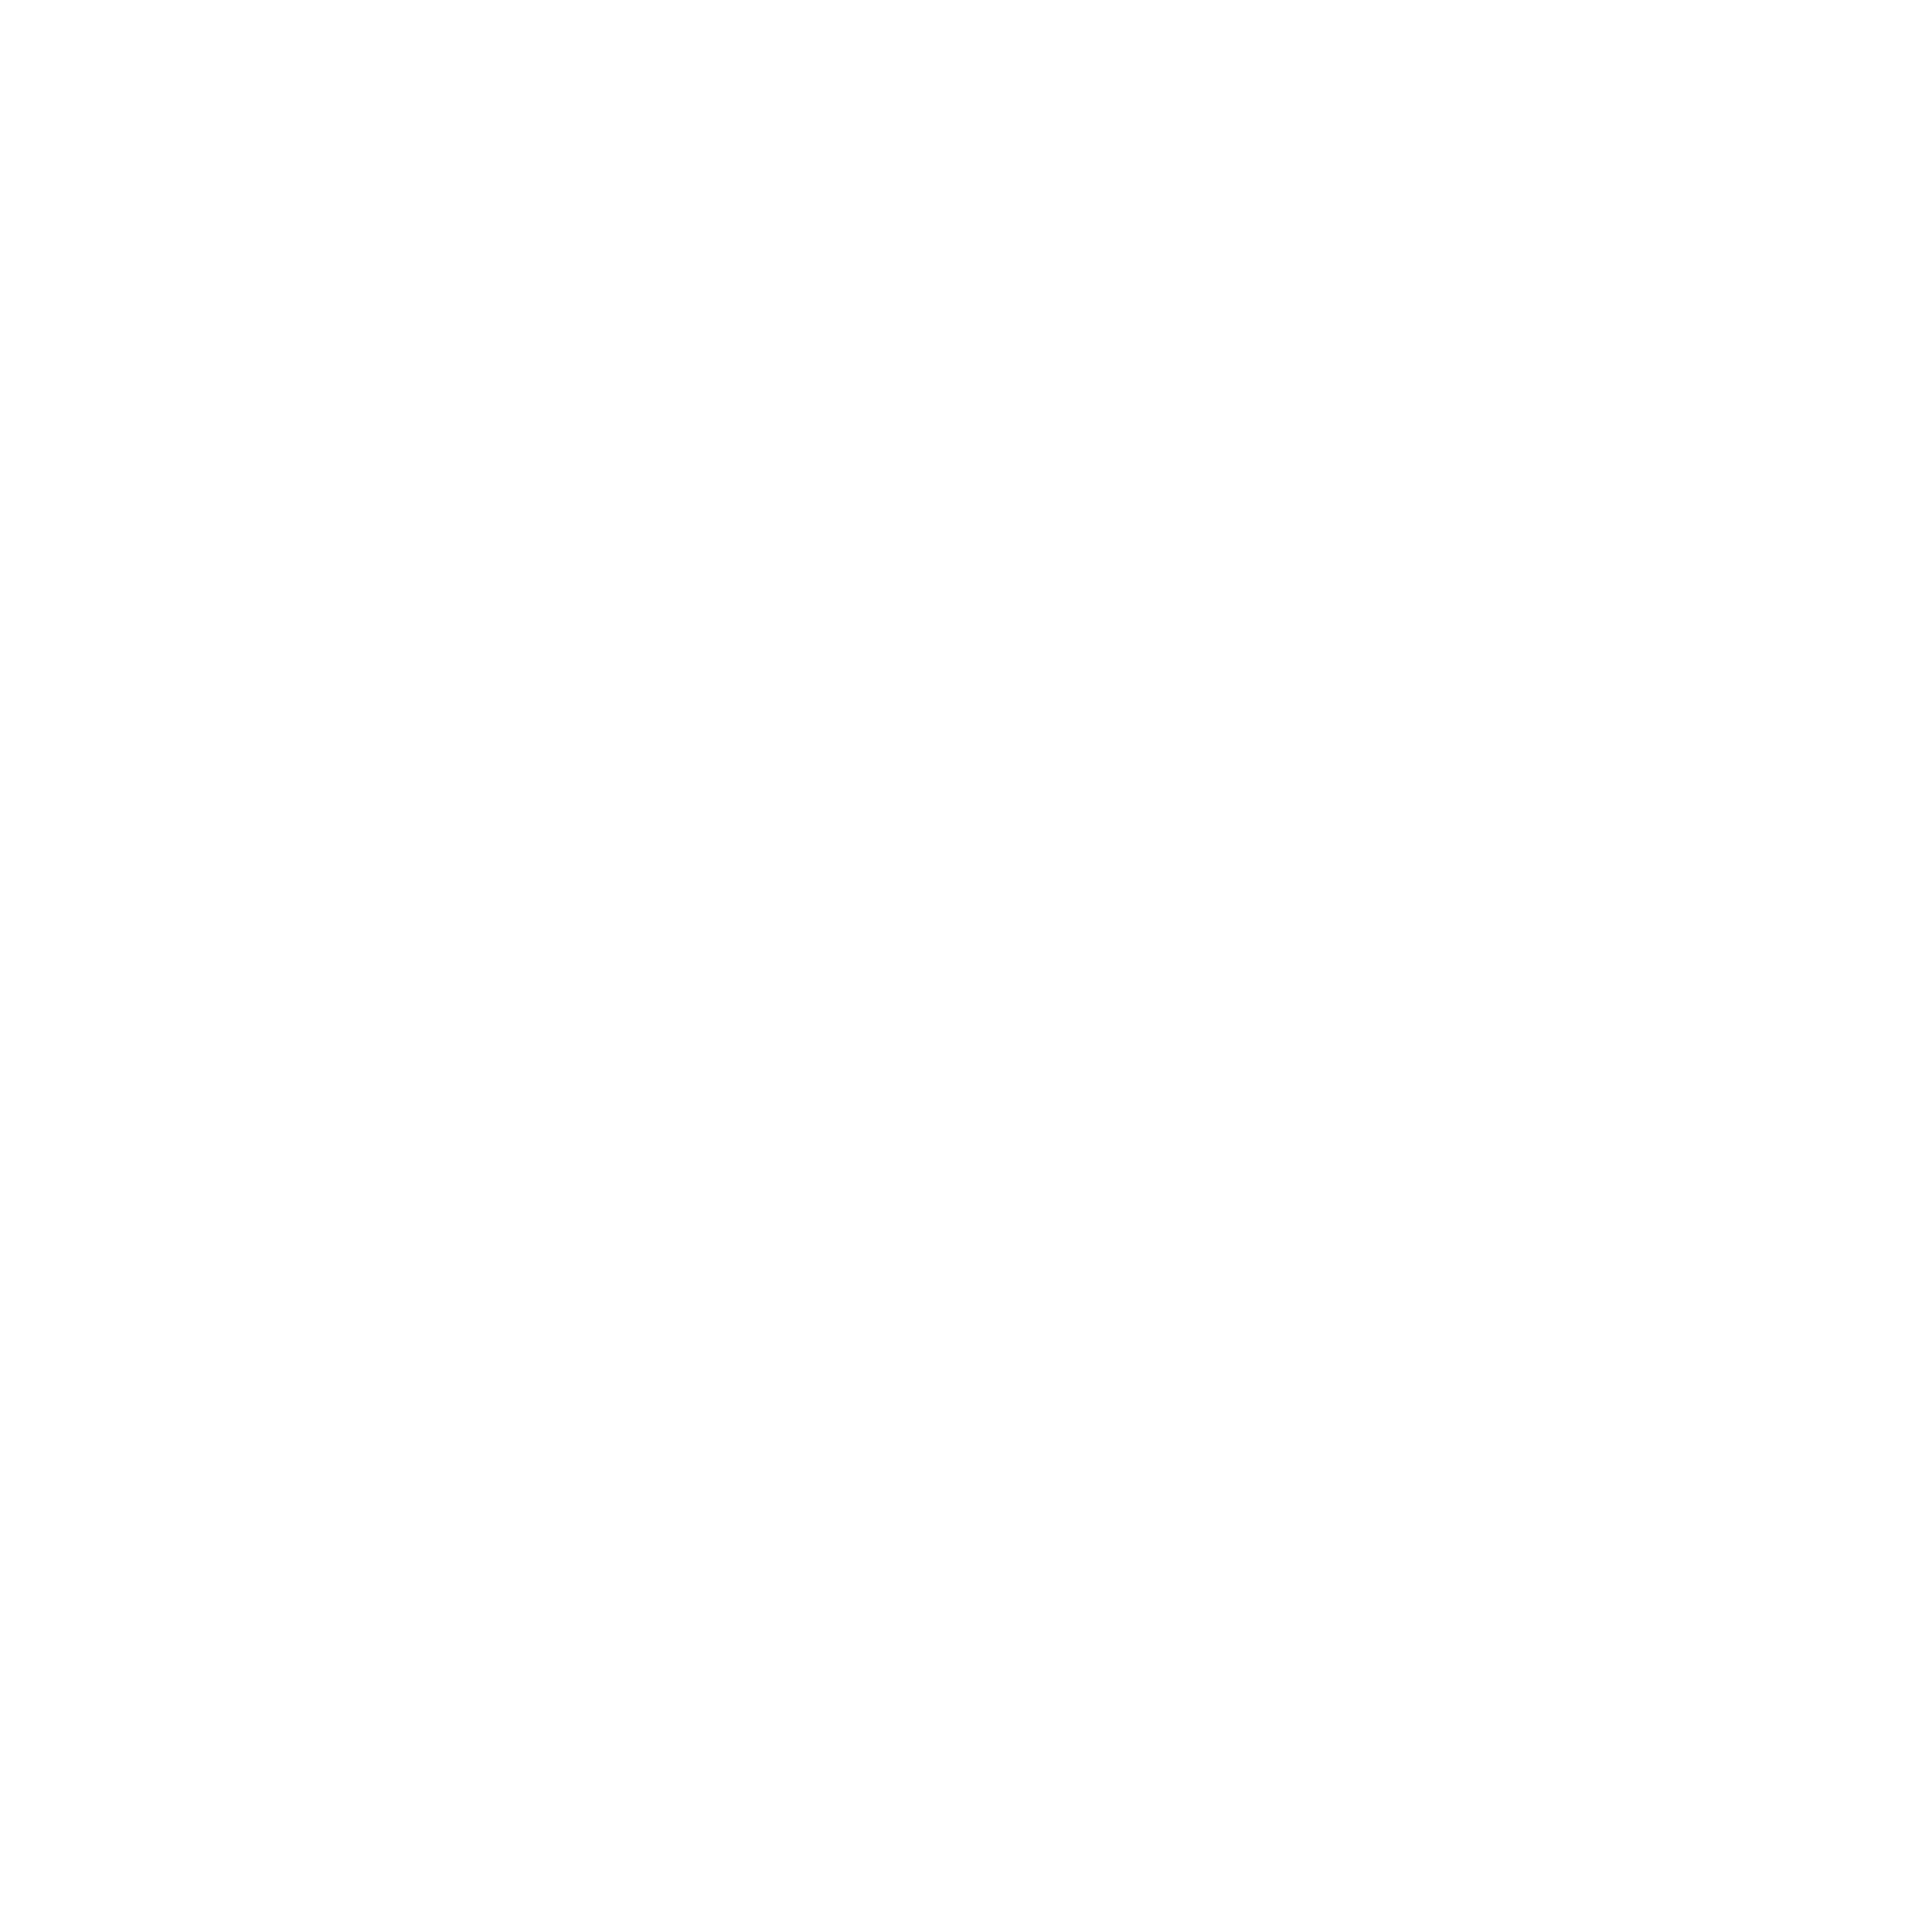 Counterculture Festival — Counterculture Club